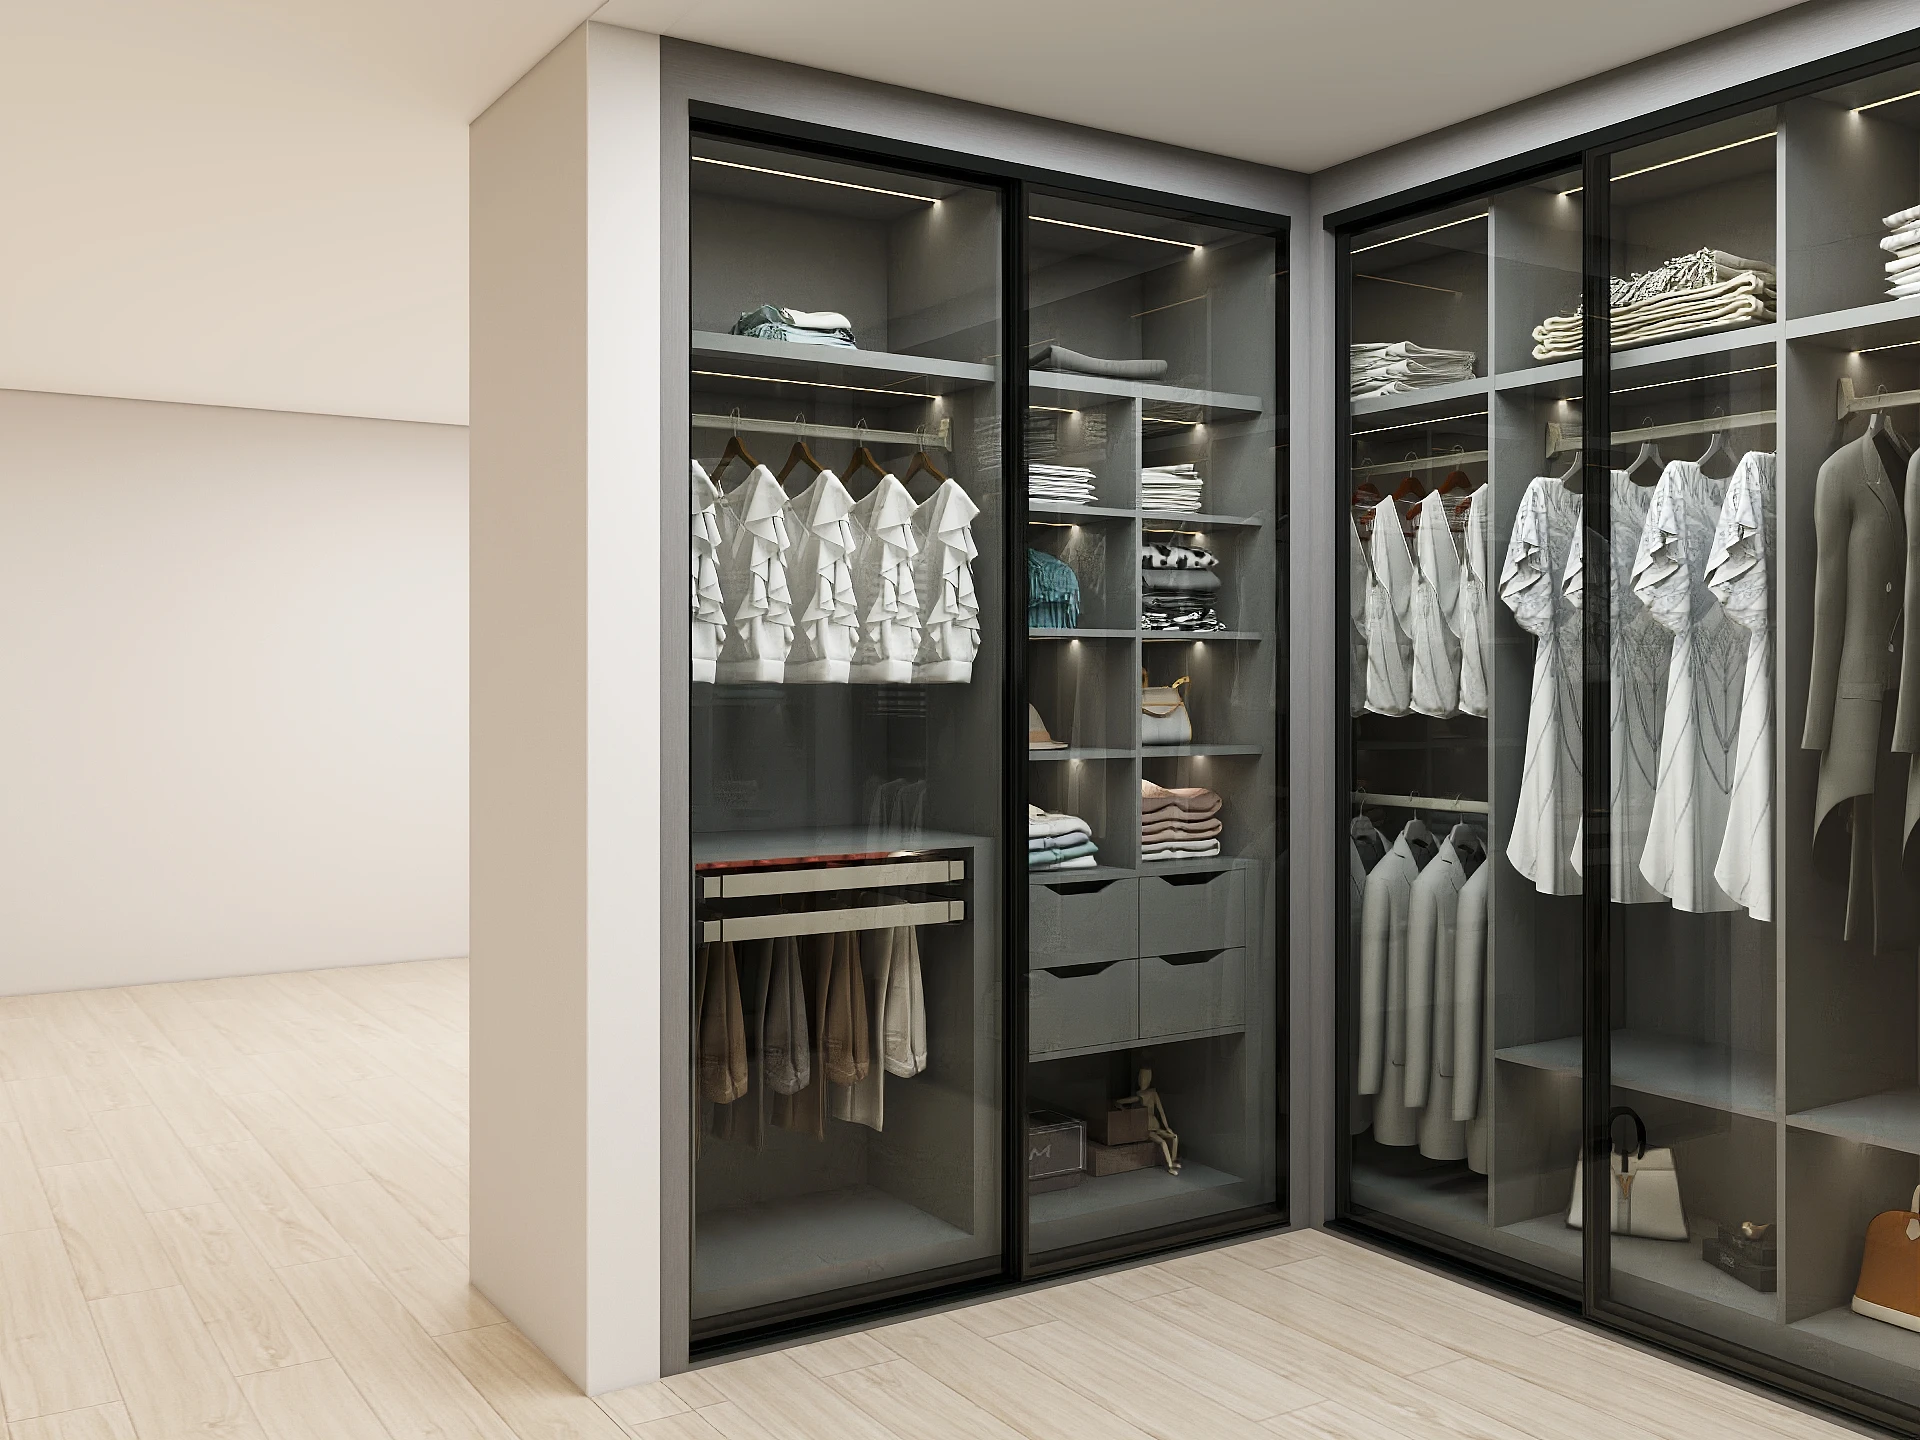 Best Price closet systems organizers glass door Melamine Finished bedroom wardrobe closet